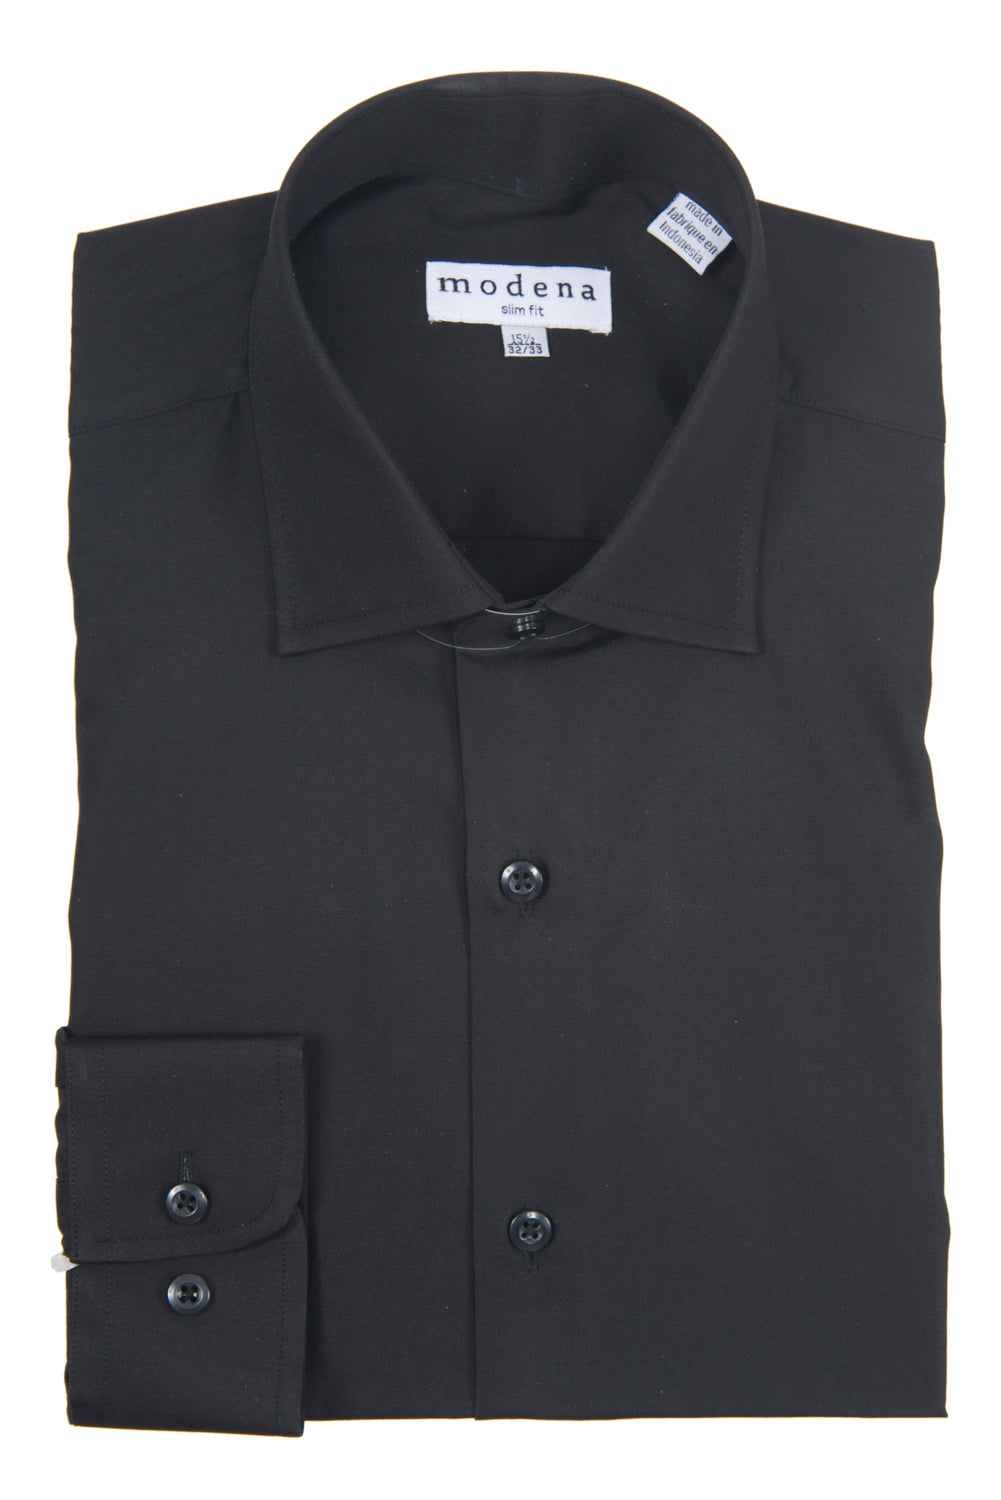 Modena - Black - Solid - Cotton Blend - Dress Shirt - Slim Fit